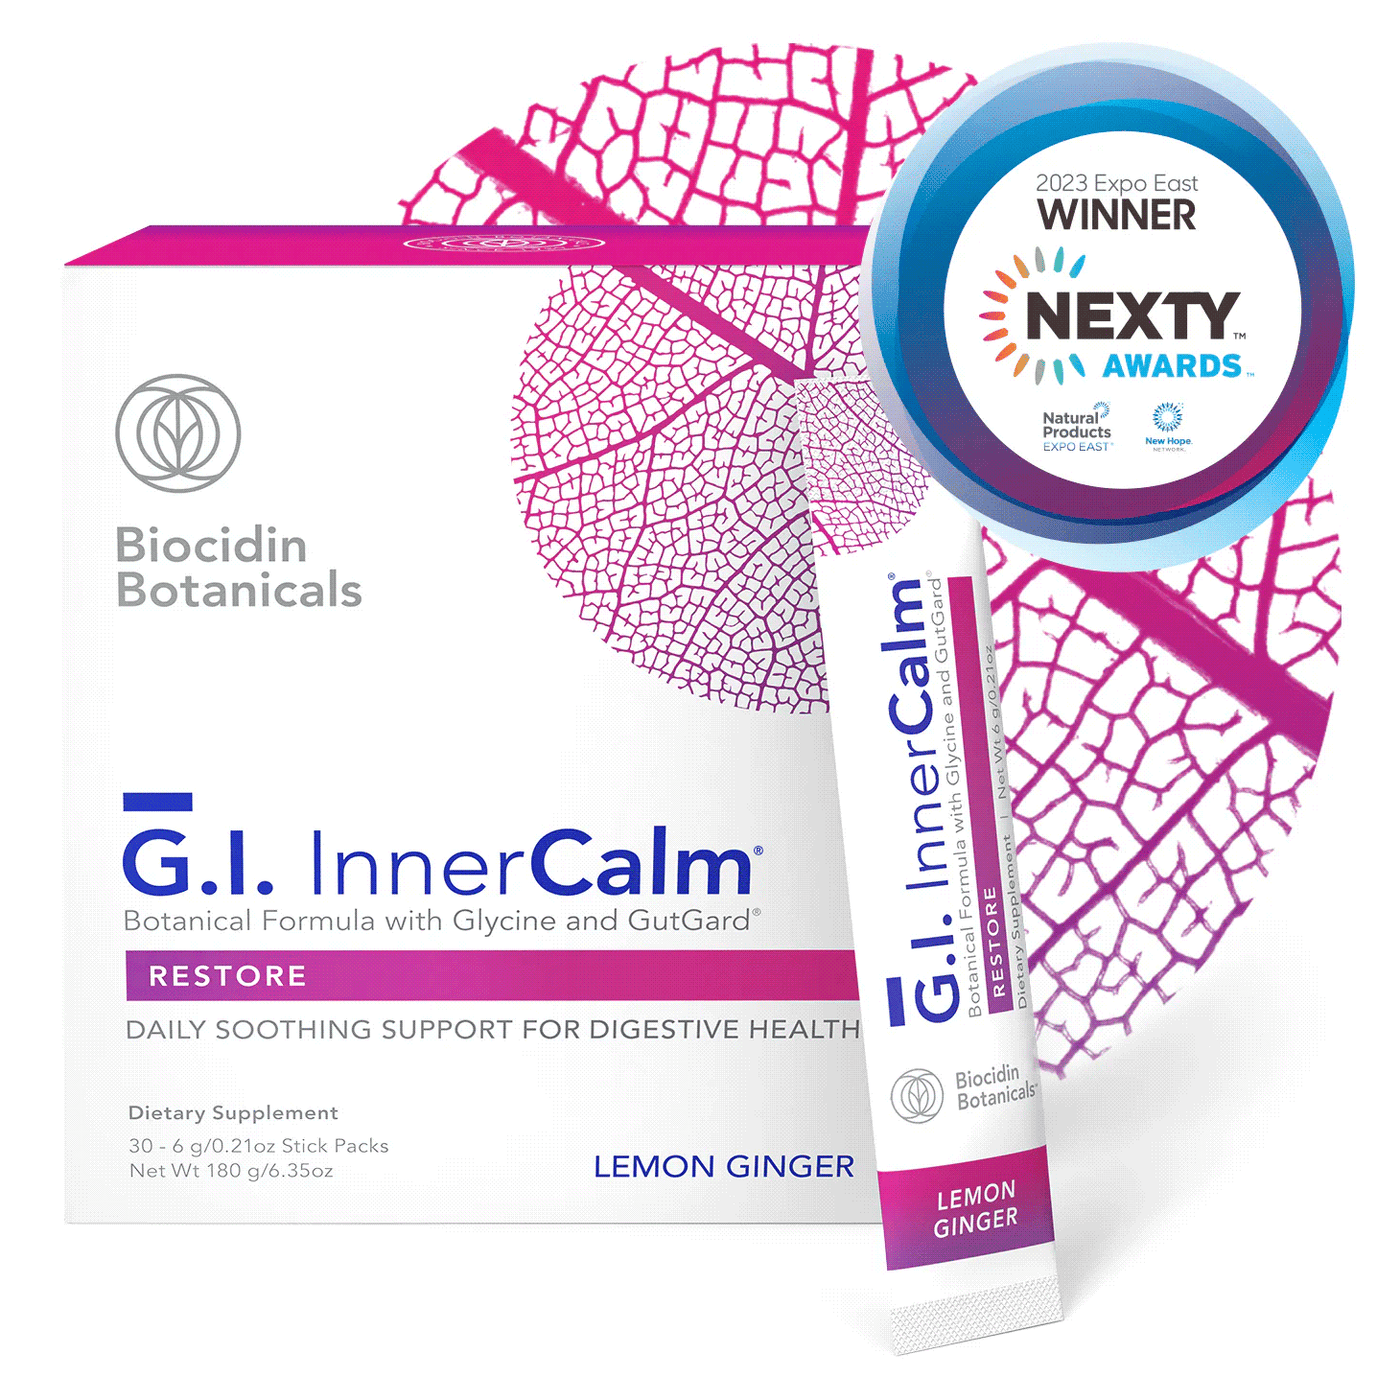 G.I. InnerCalm® - Botanical Formula with Glycine and GutGard® | Professional